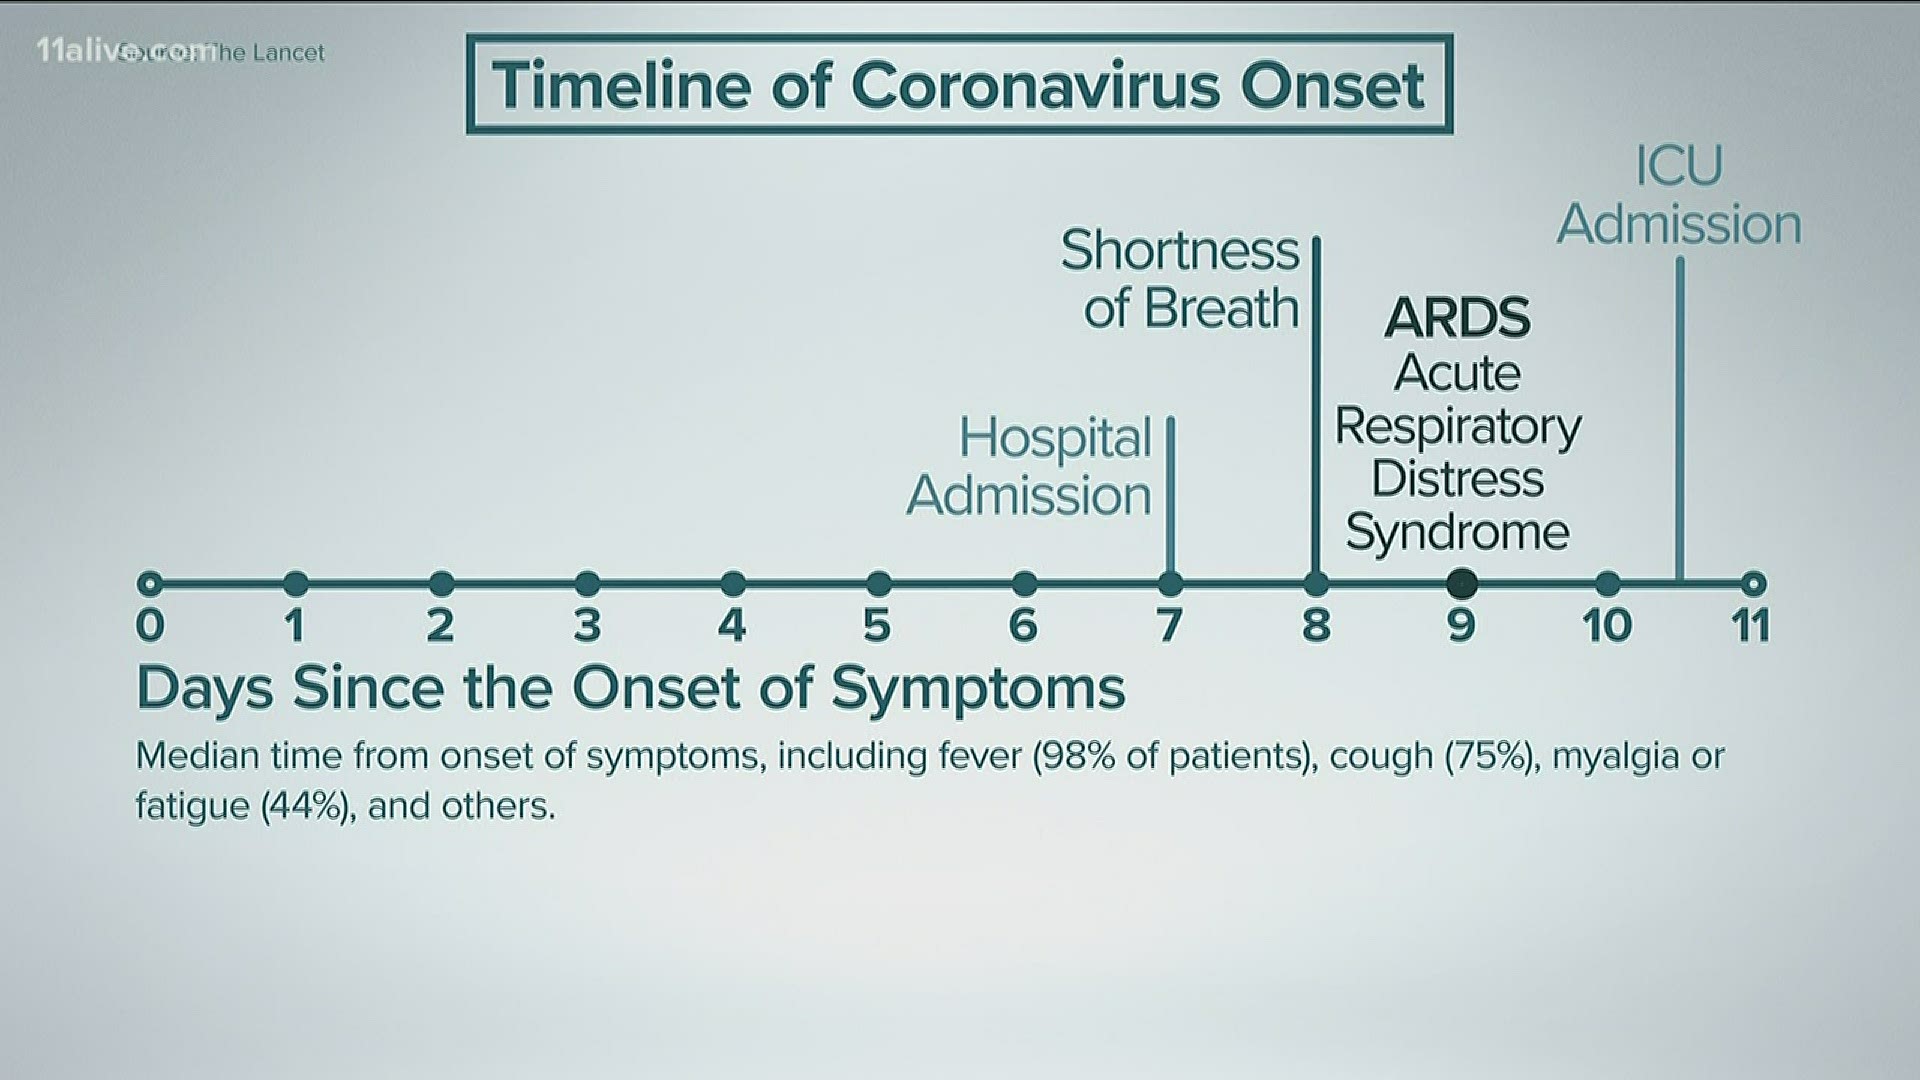 Data shows timeline of coronavirus symptoms